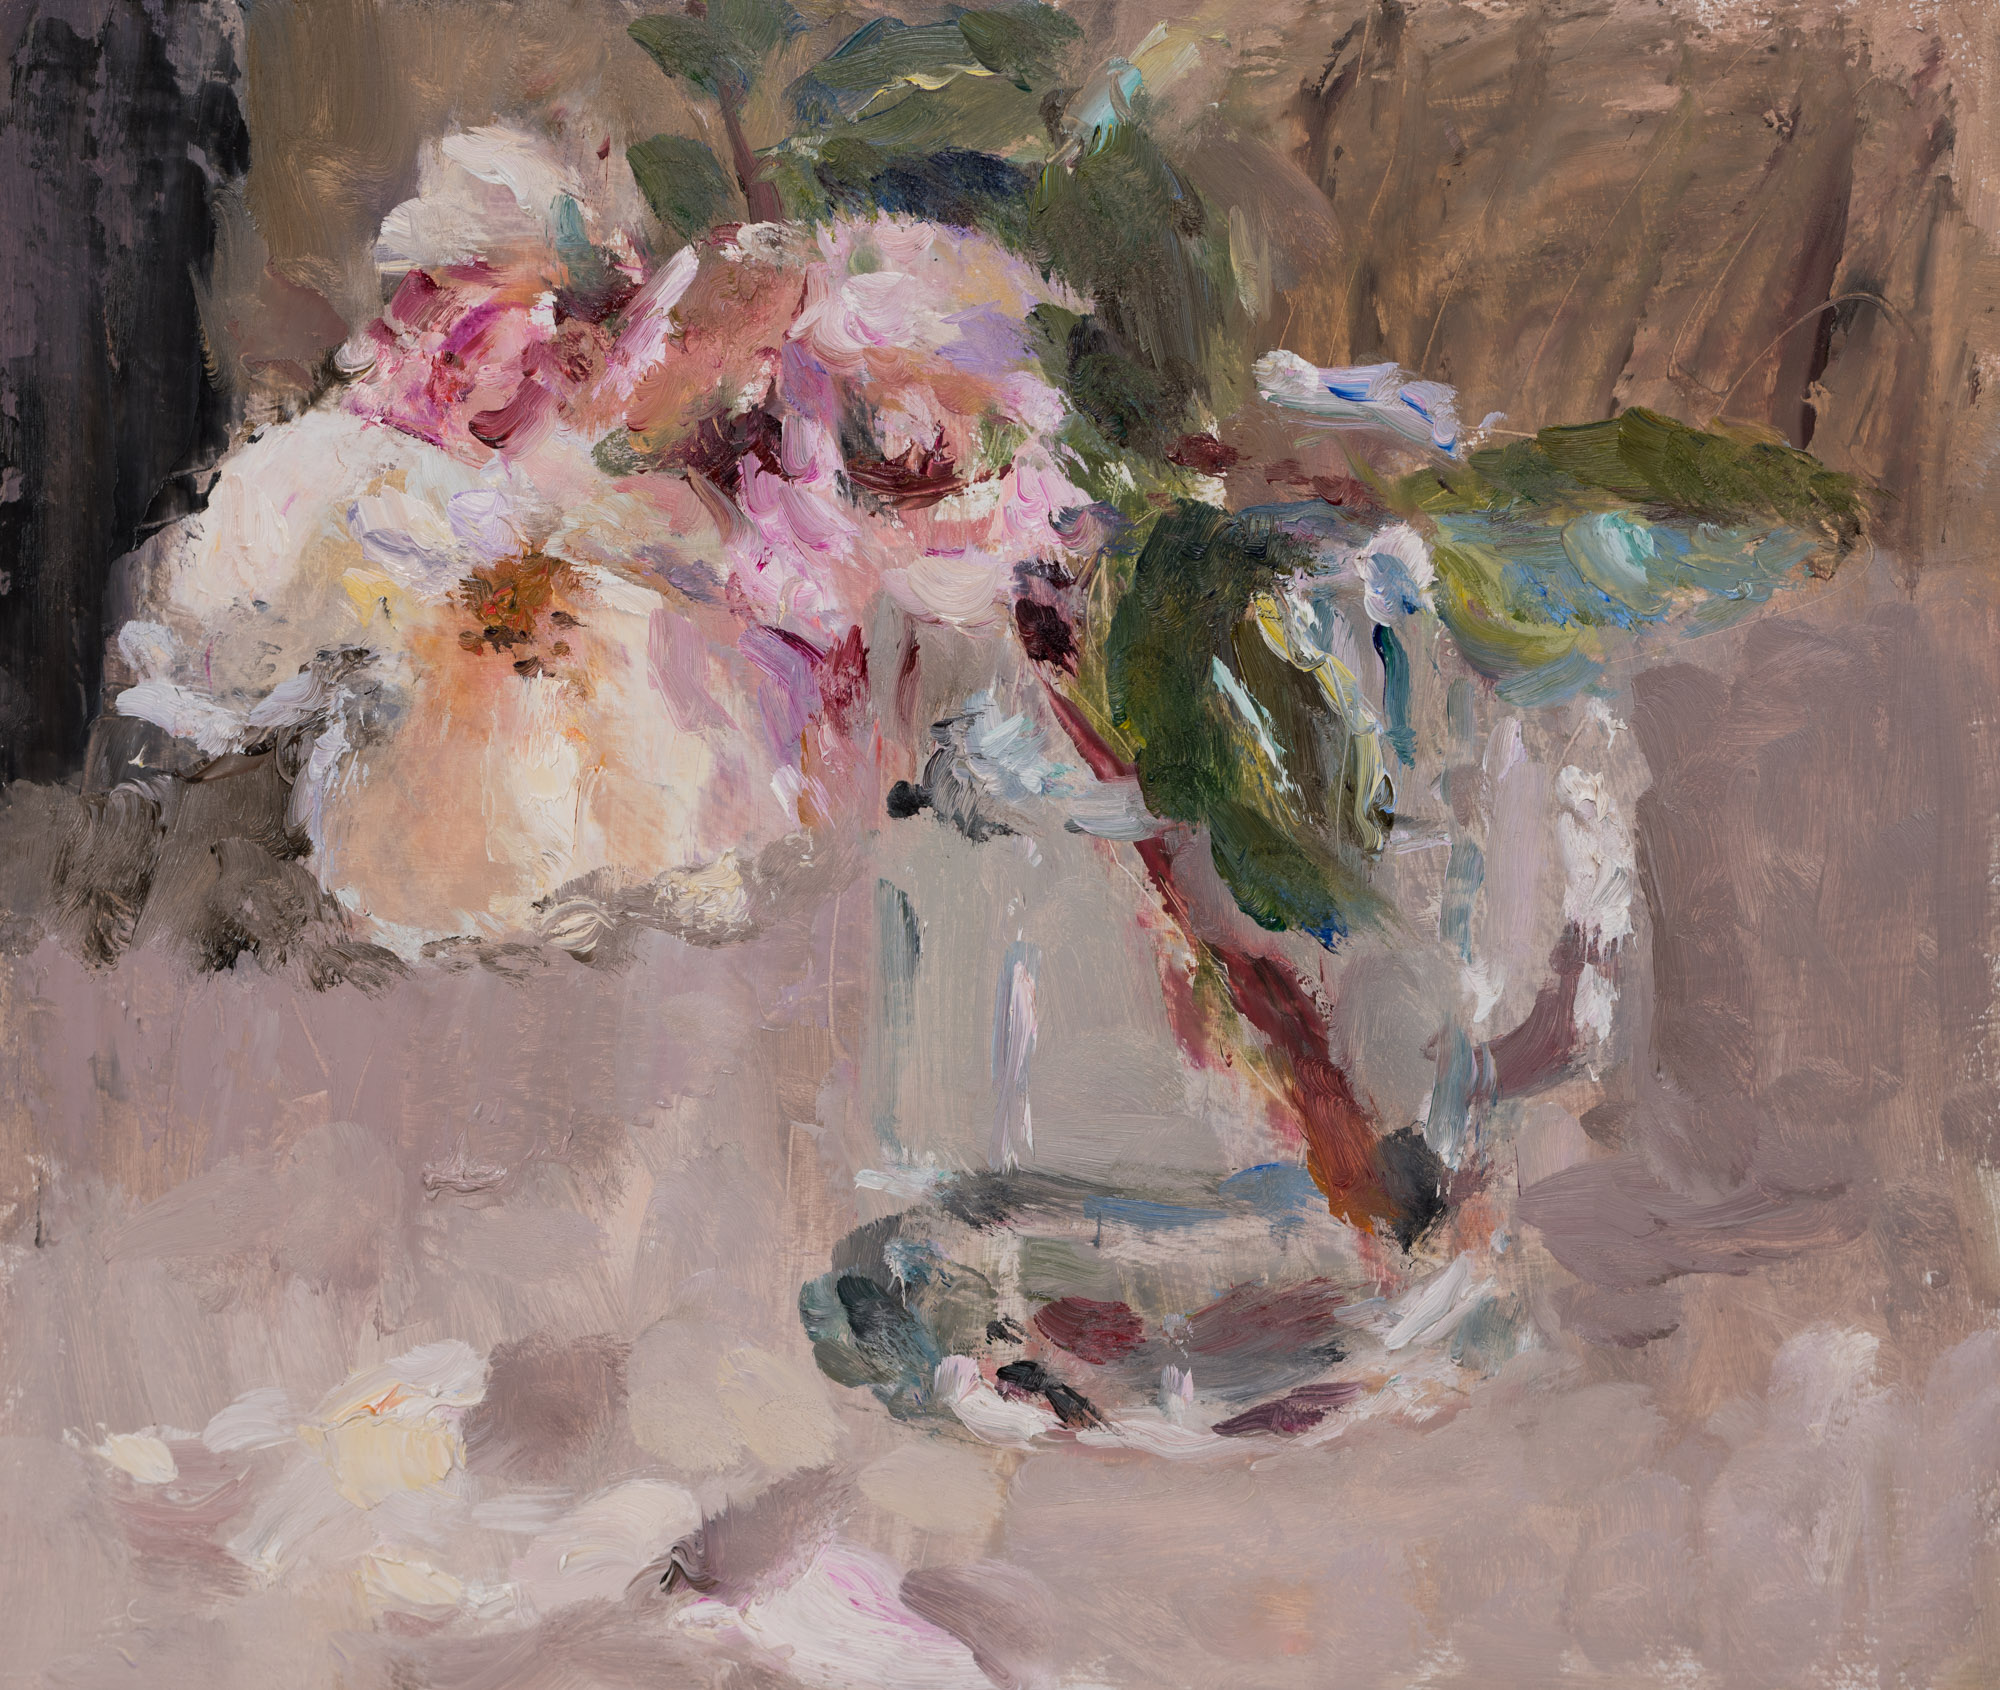 Roses in a Glass Tankard, Oil on Board, 32.3cm x 37.8cm (2019-98)